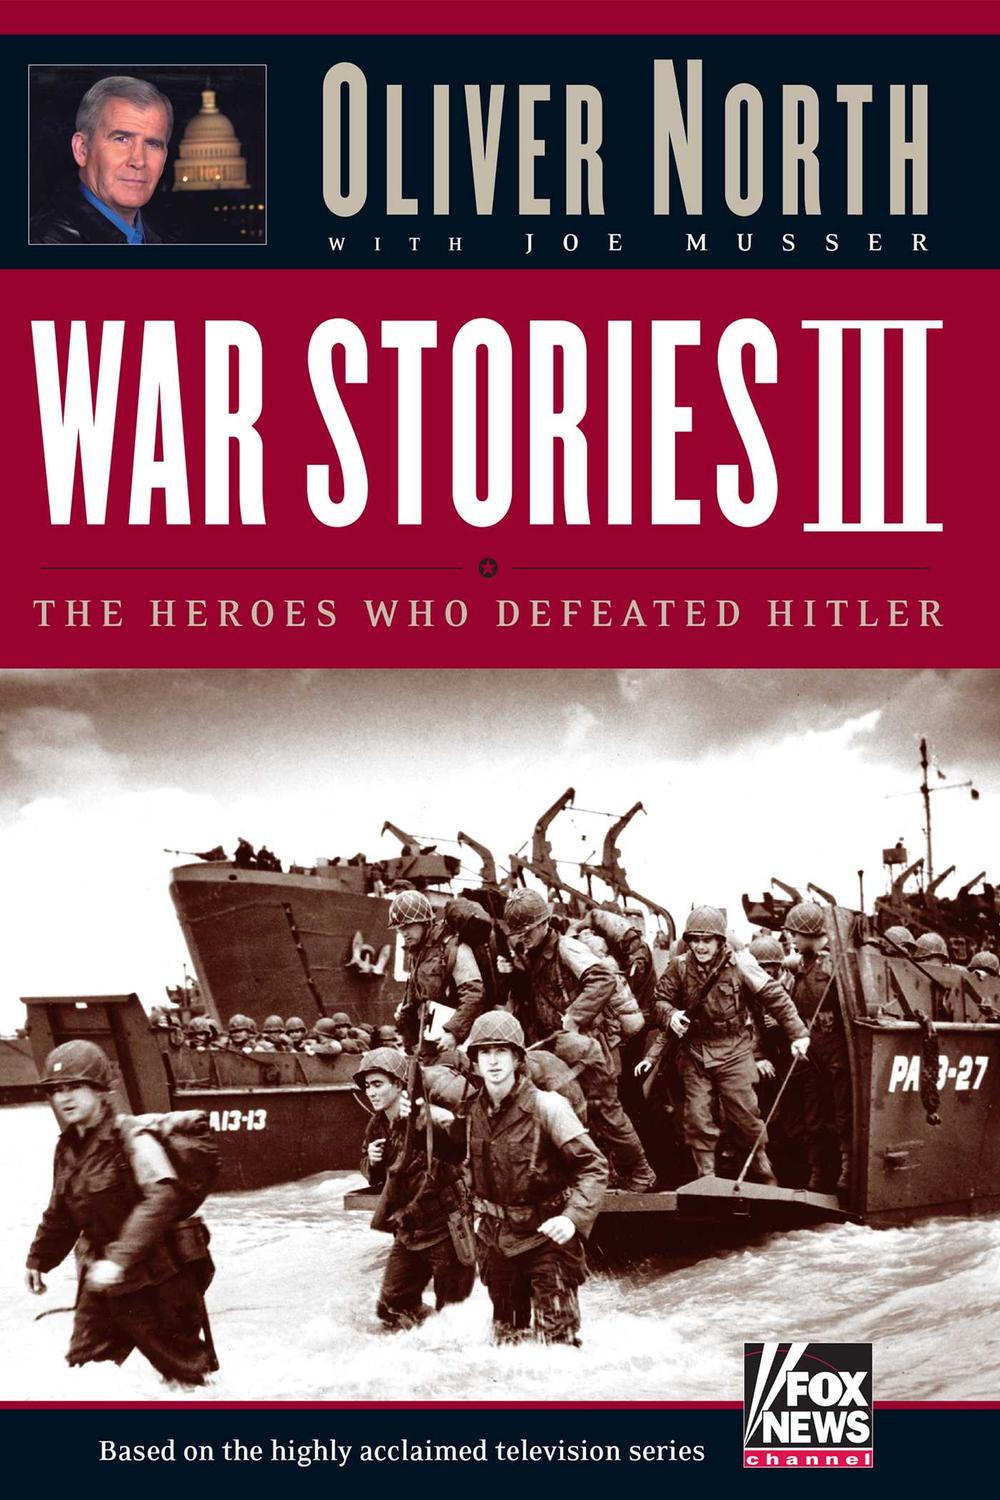 War Stories III - Oliver L. North, Joe Musser